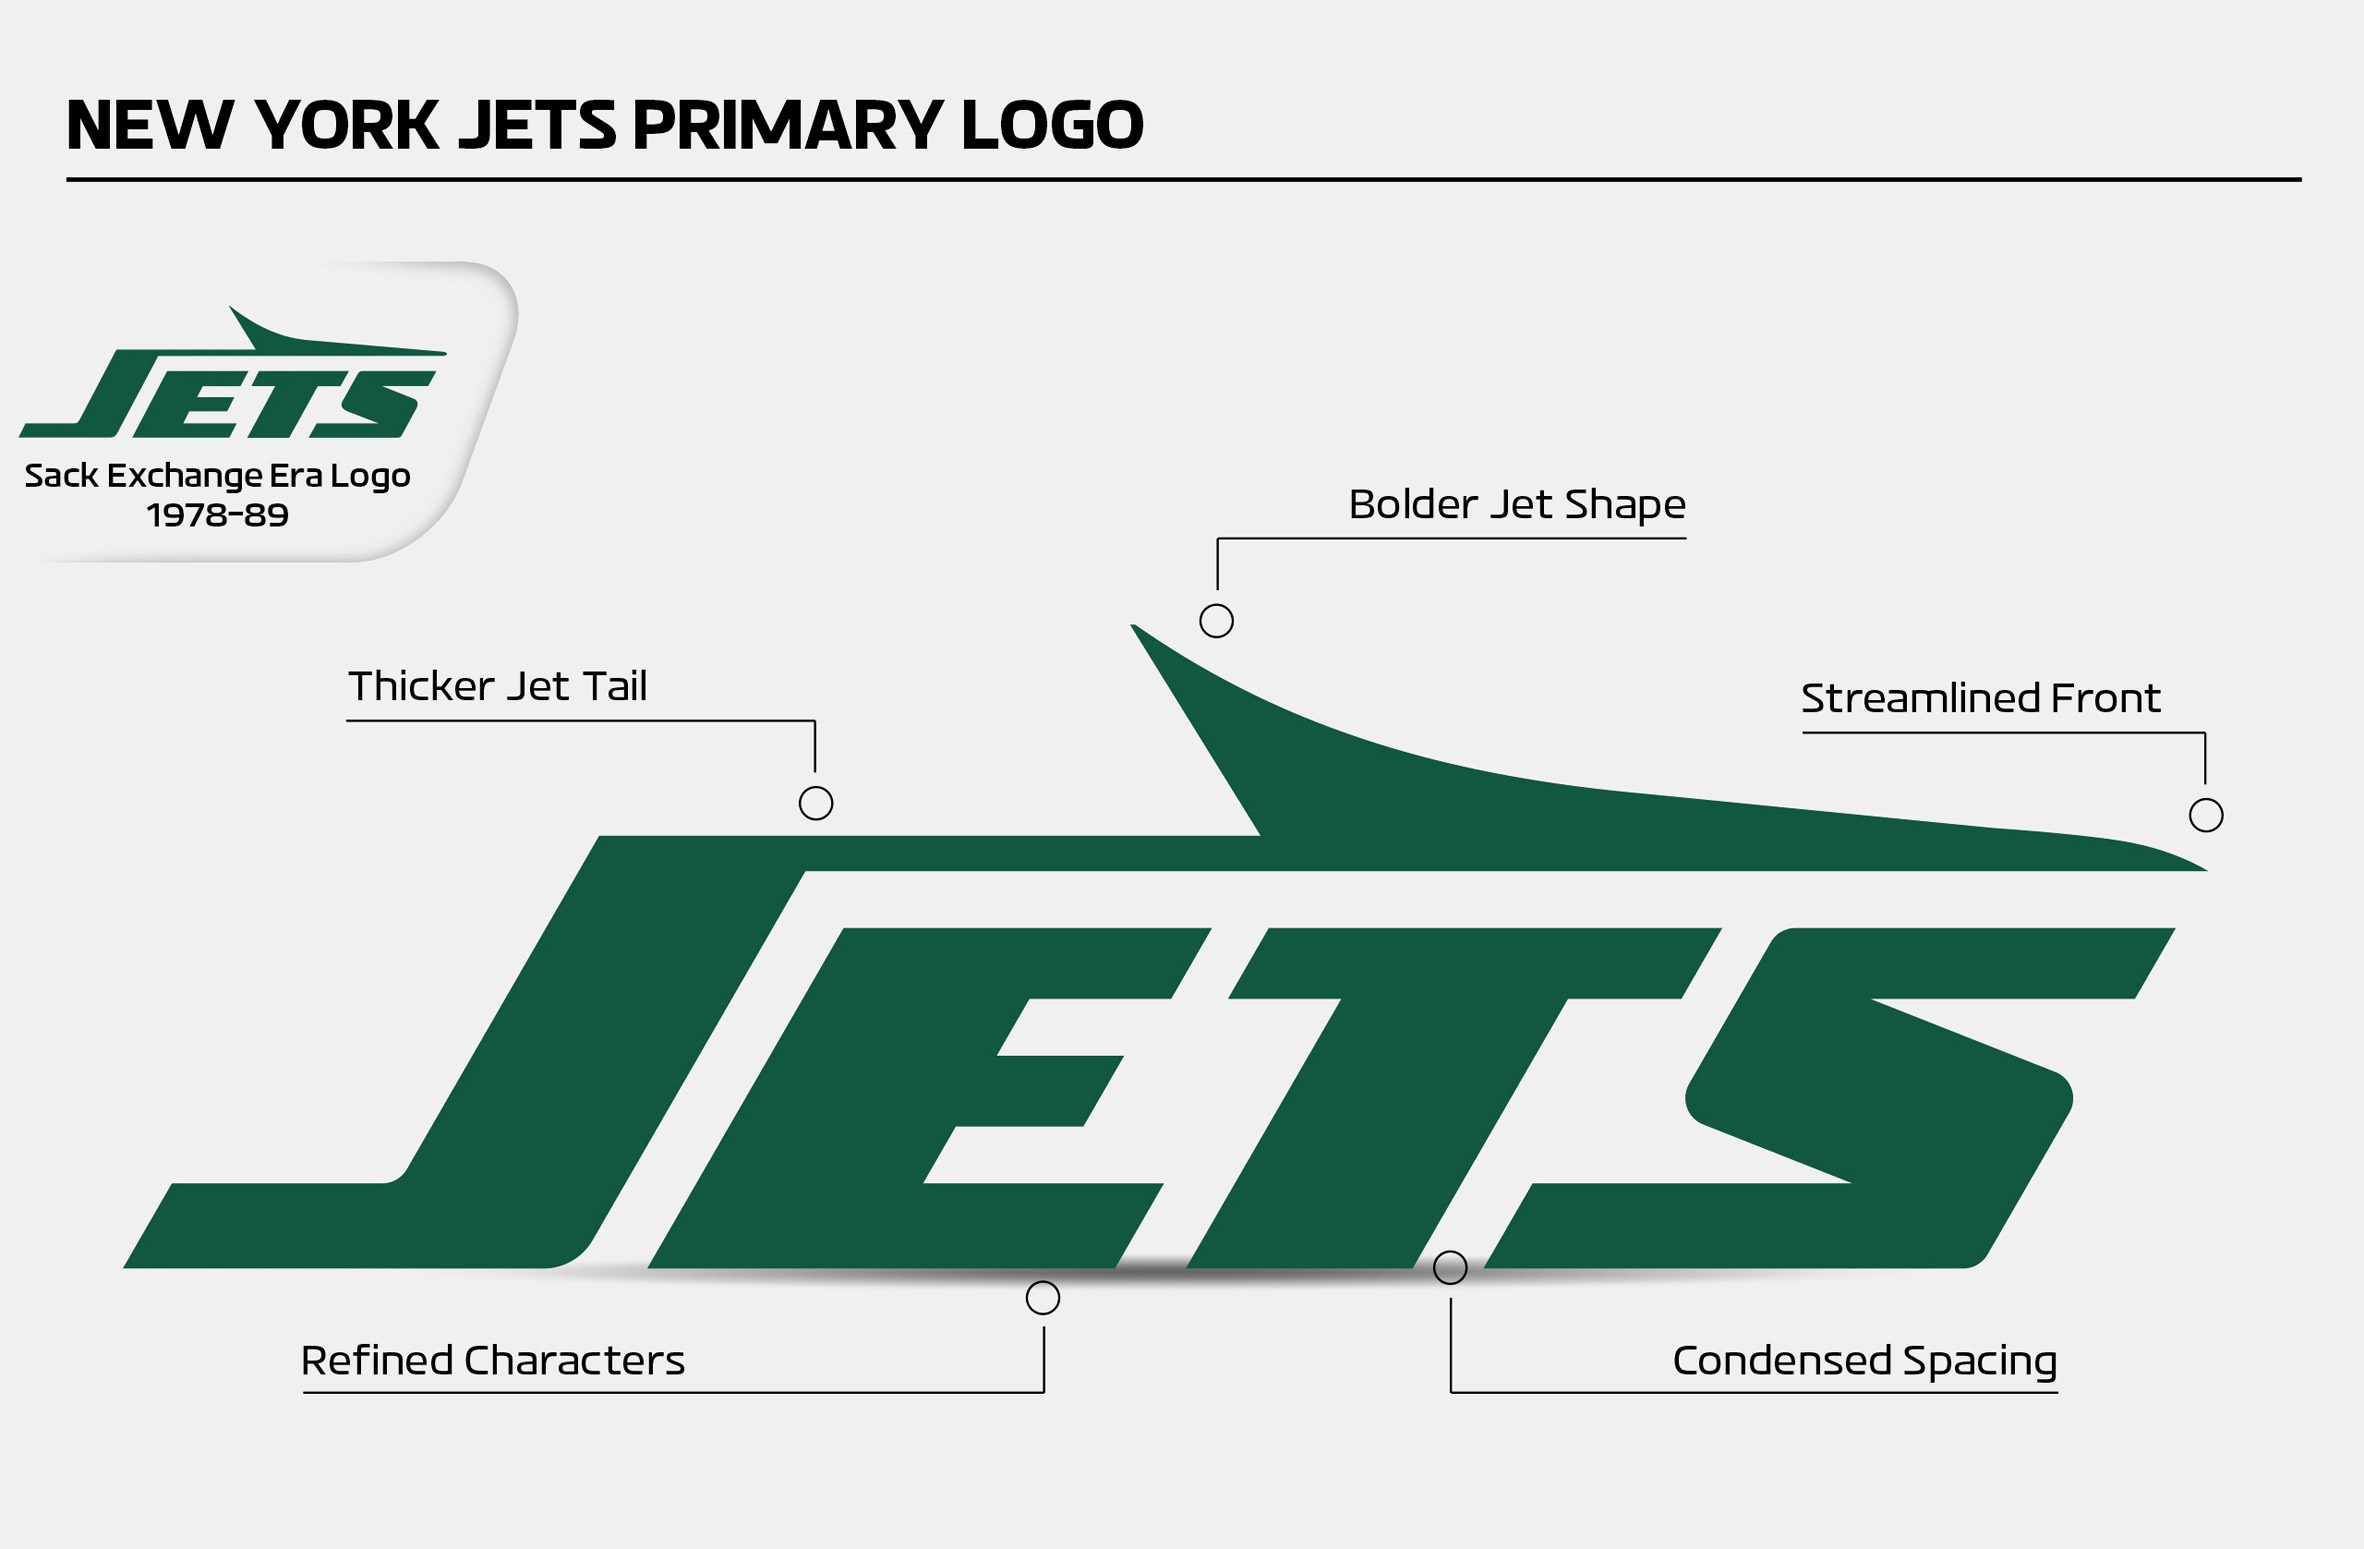 New York Jets logo and rebrand